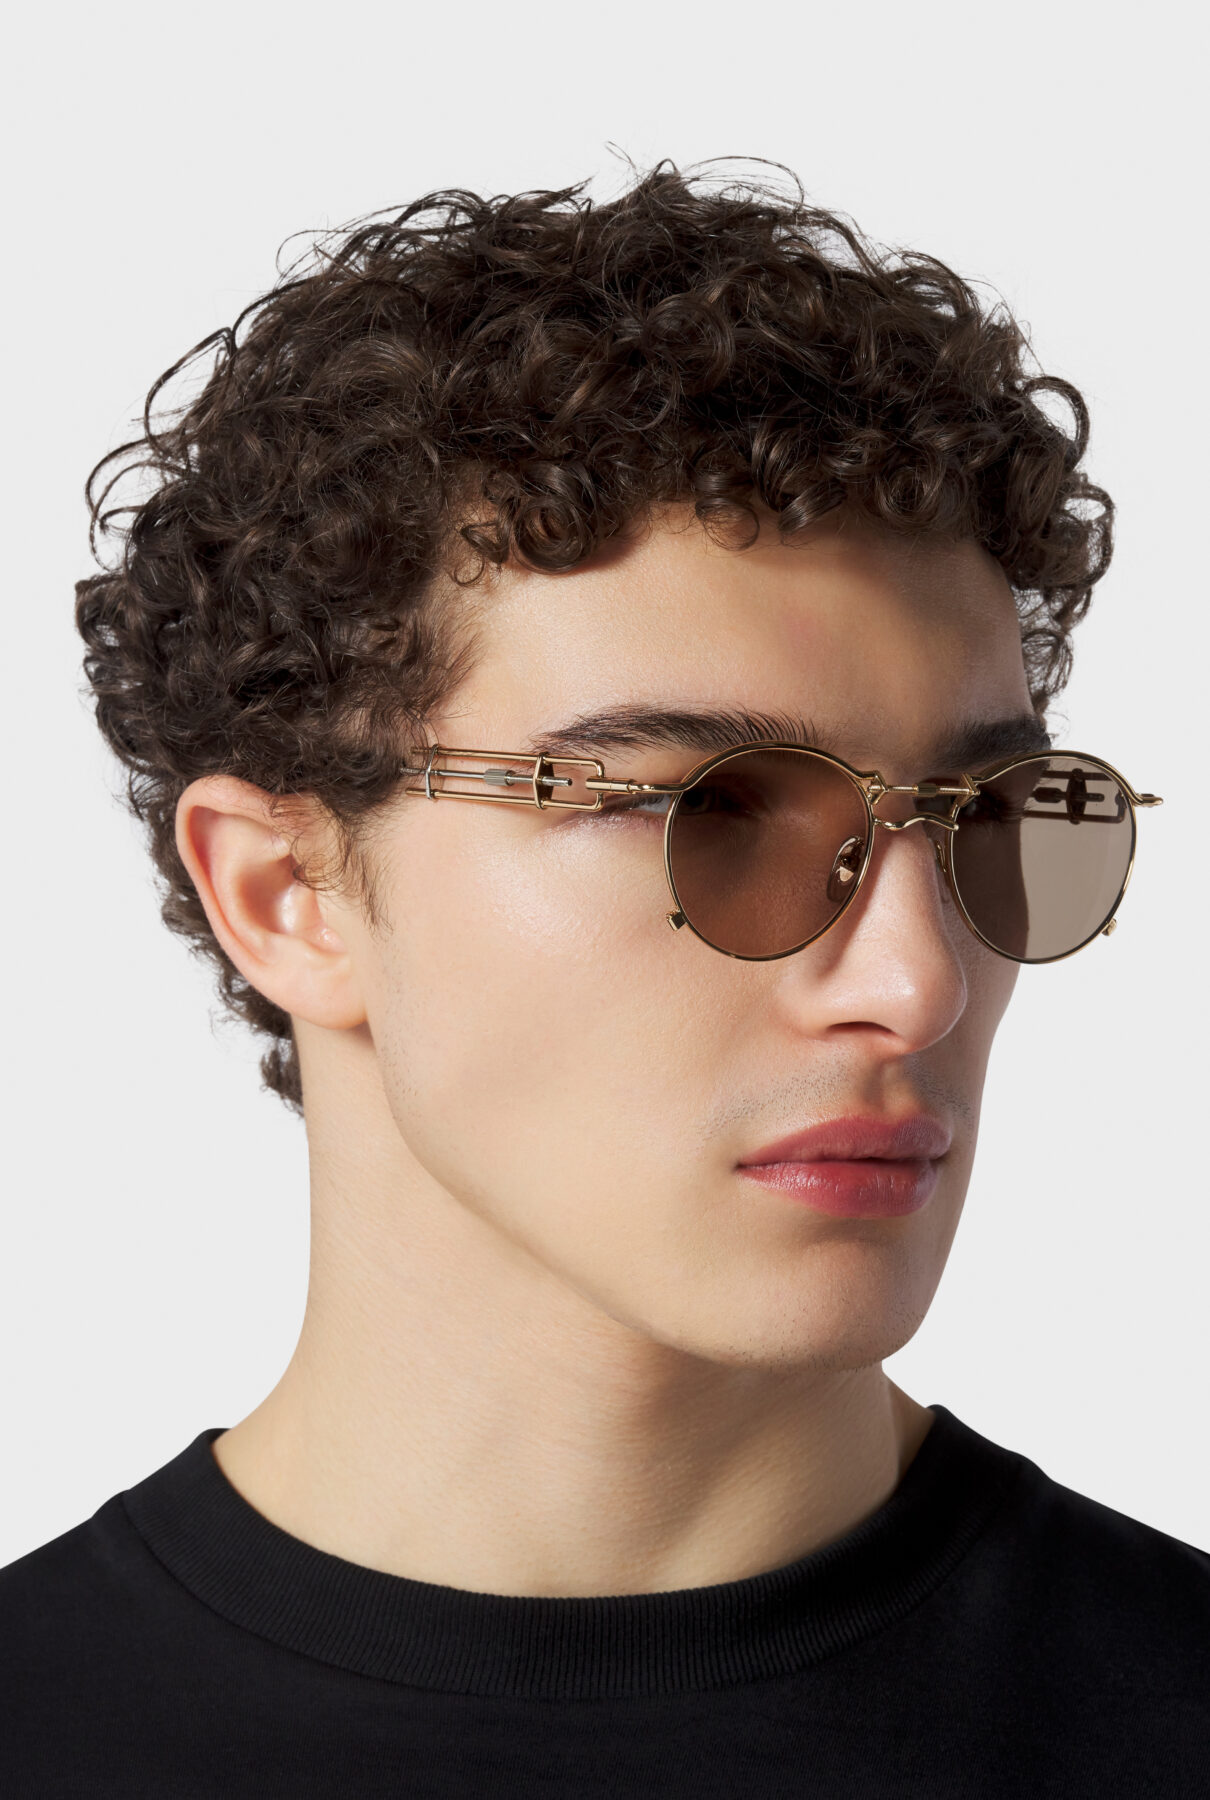 Introducing the Exclusive Jean Paul Gaultier x Burna Boy Eyewear Collection Weloveglasses Fashion Online News Buy Shop